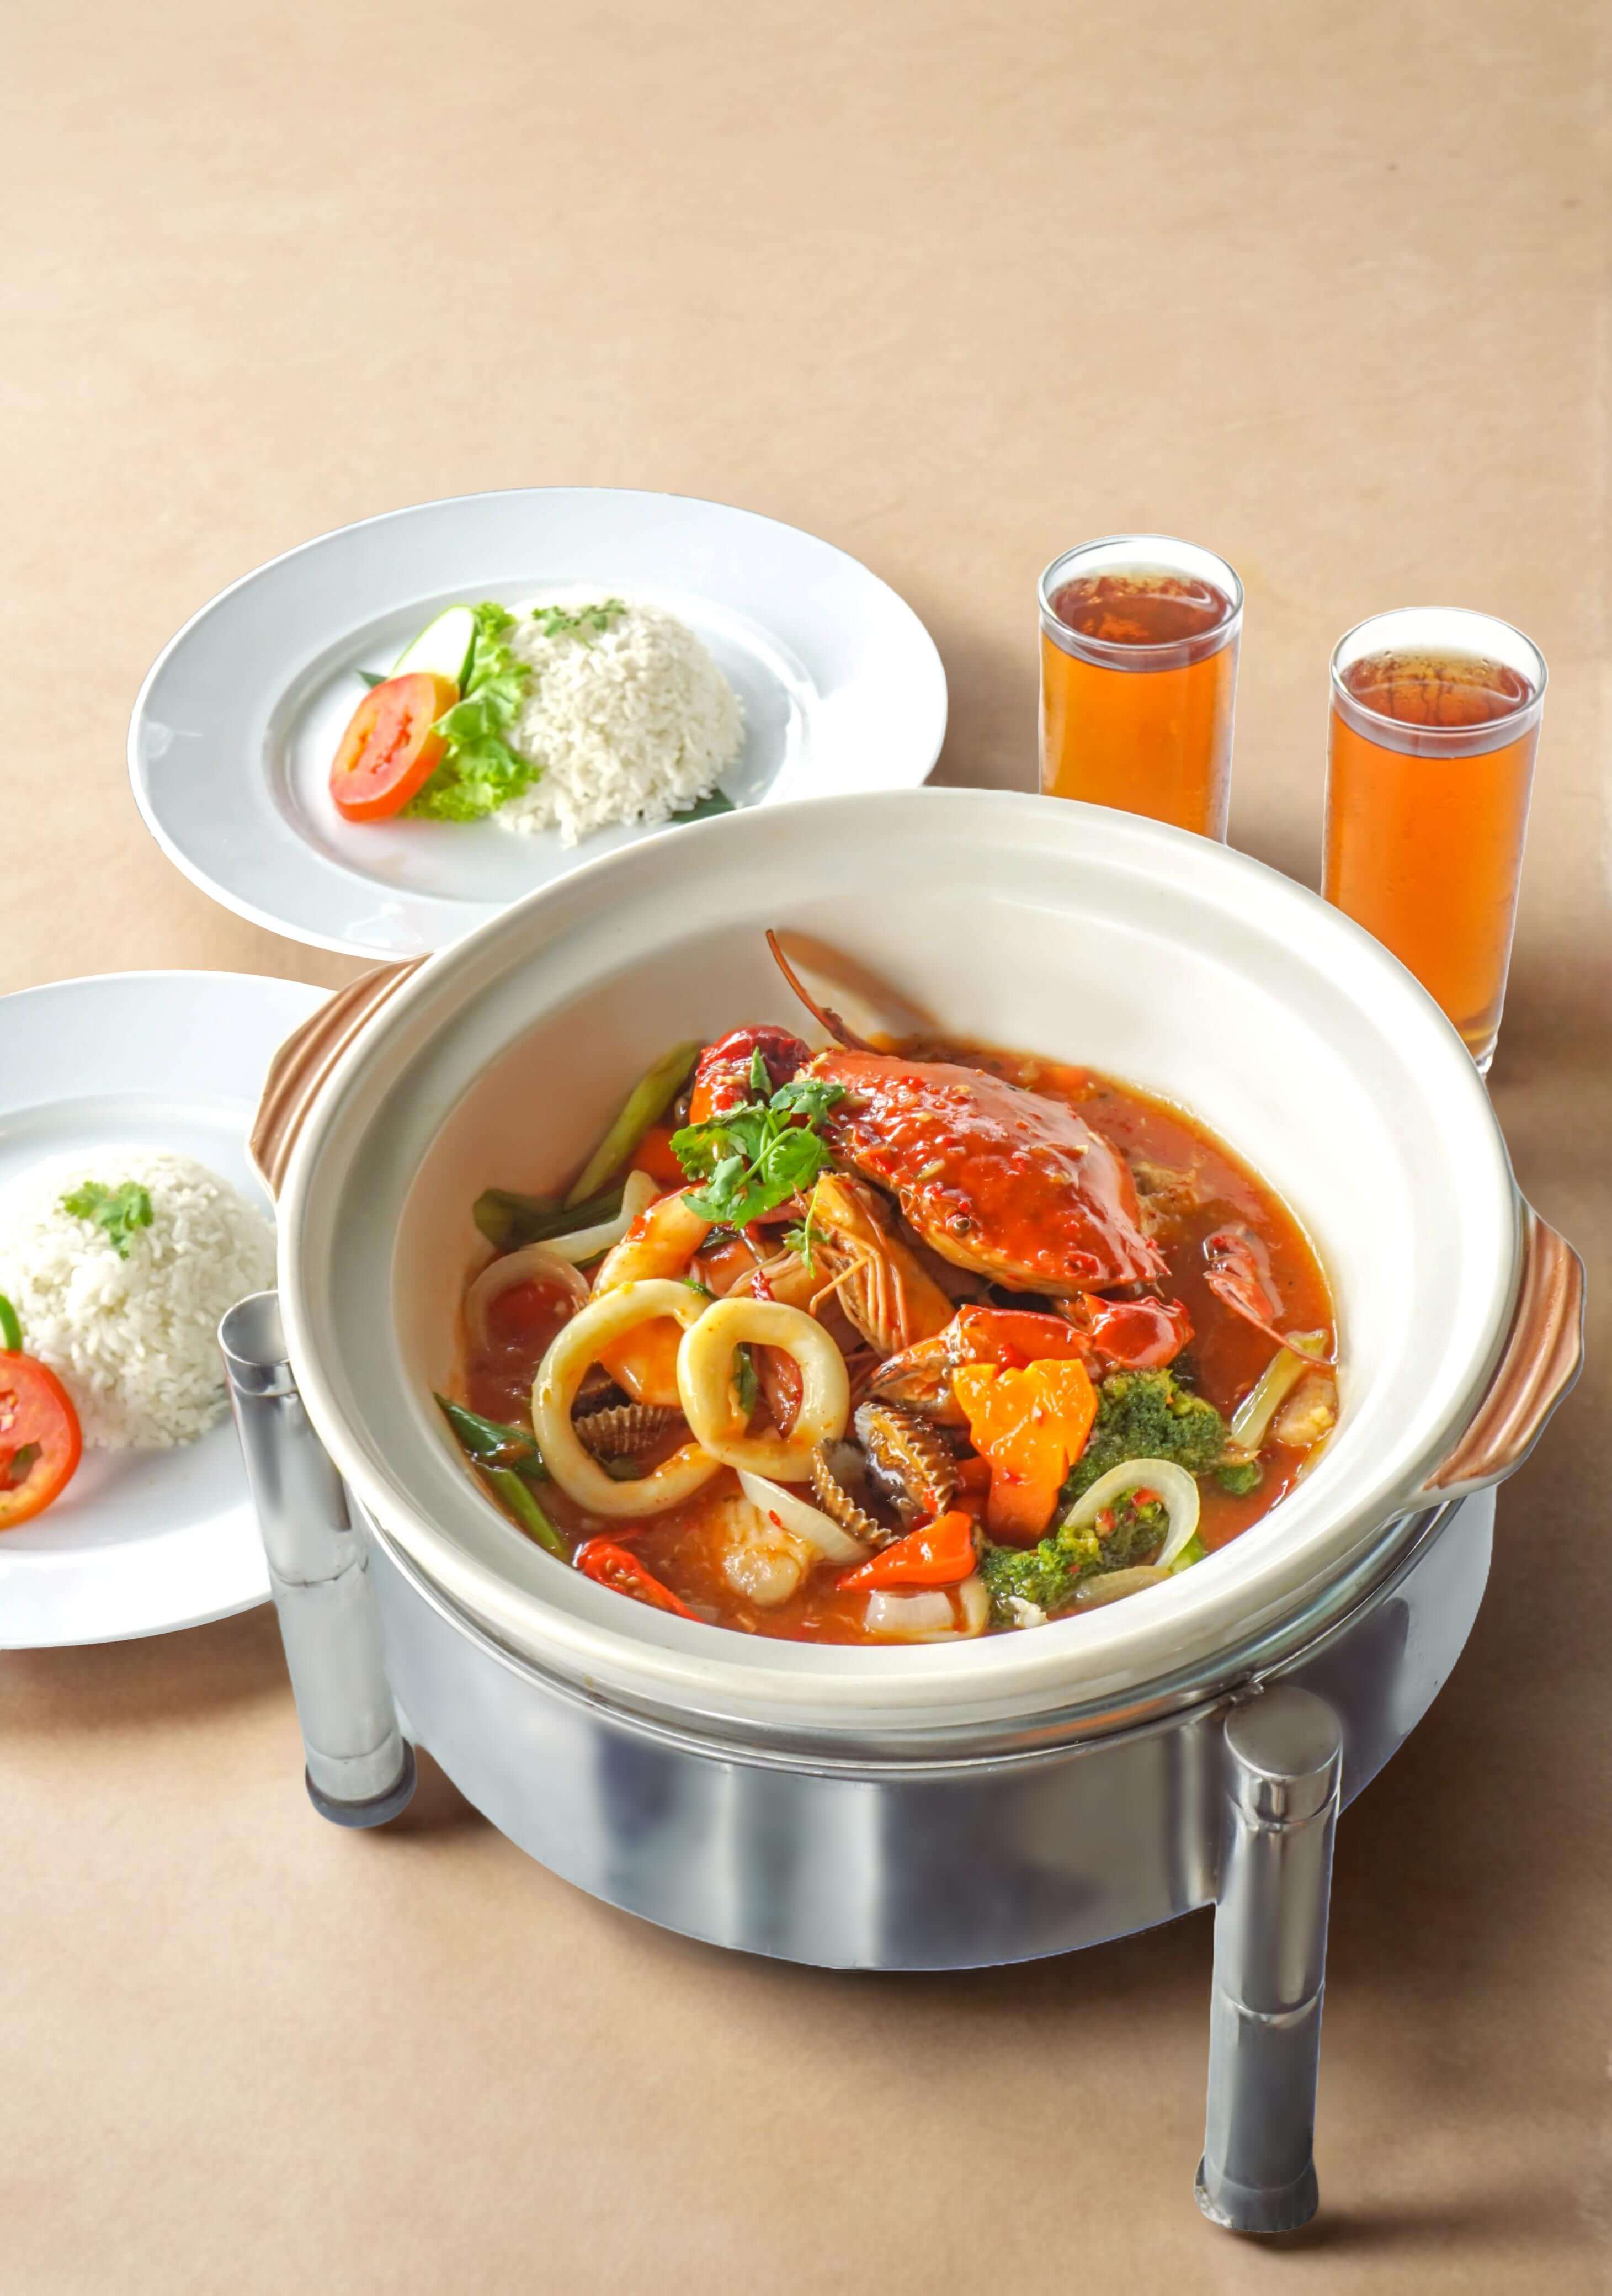 Swiss-Belhotel Jambi Hadirkan Paket Makan Berdua dengan Promo Hidangan Terbaru “Seafood Claypot”